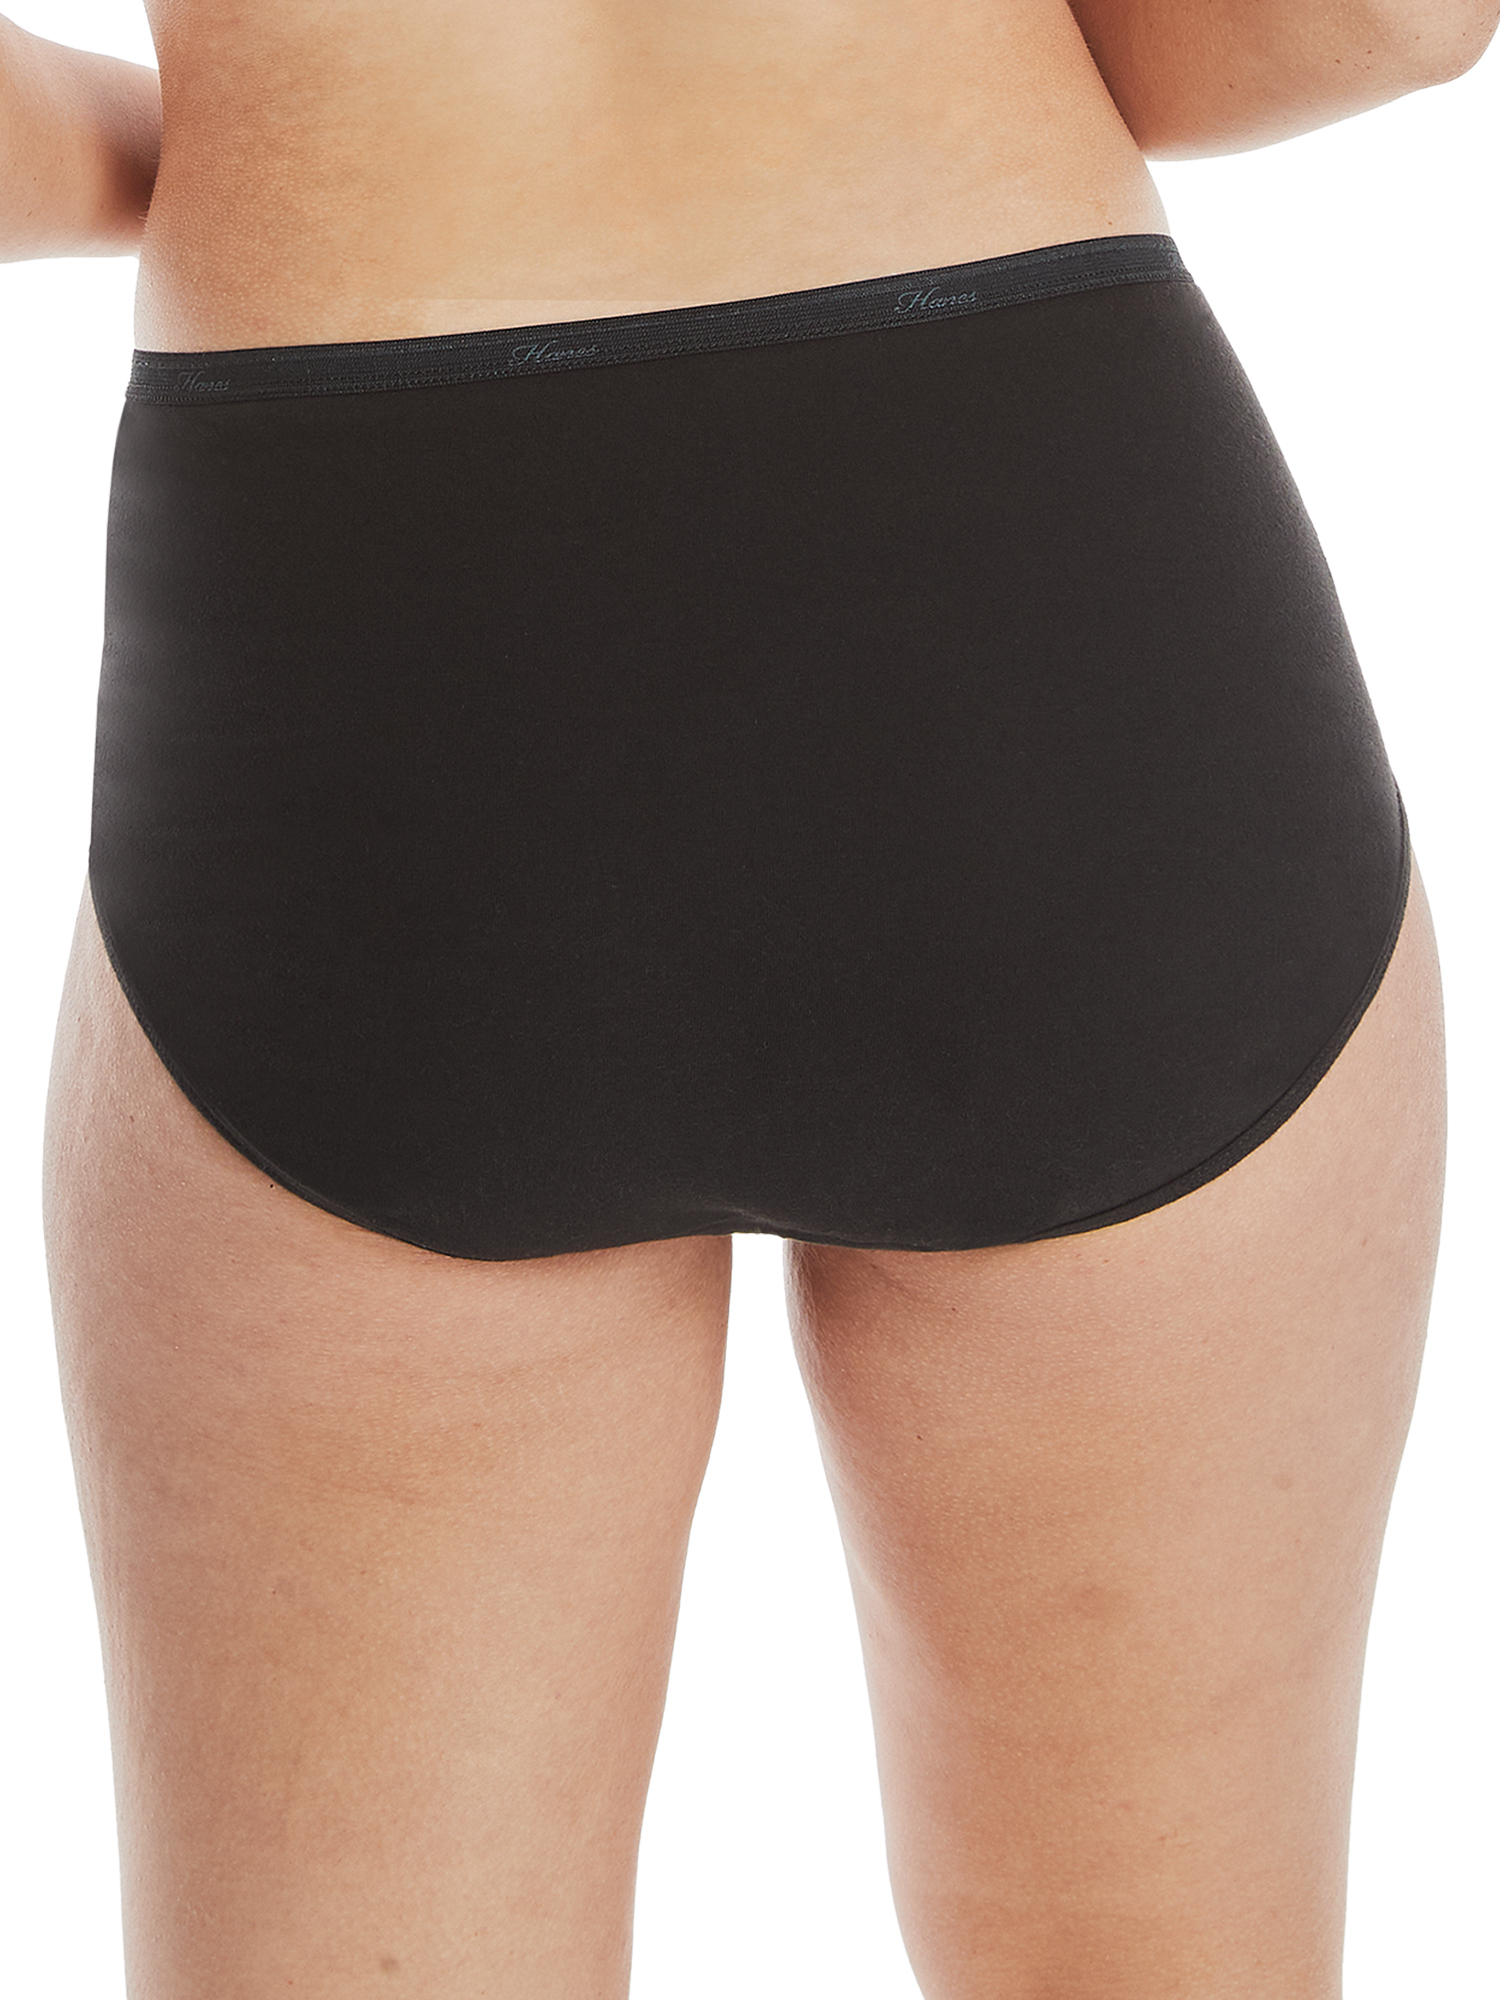 Hanes Women's Cool Comfort Cotton Brief Underwear, 6-Pack - image 4 of 7